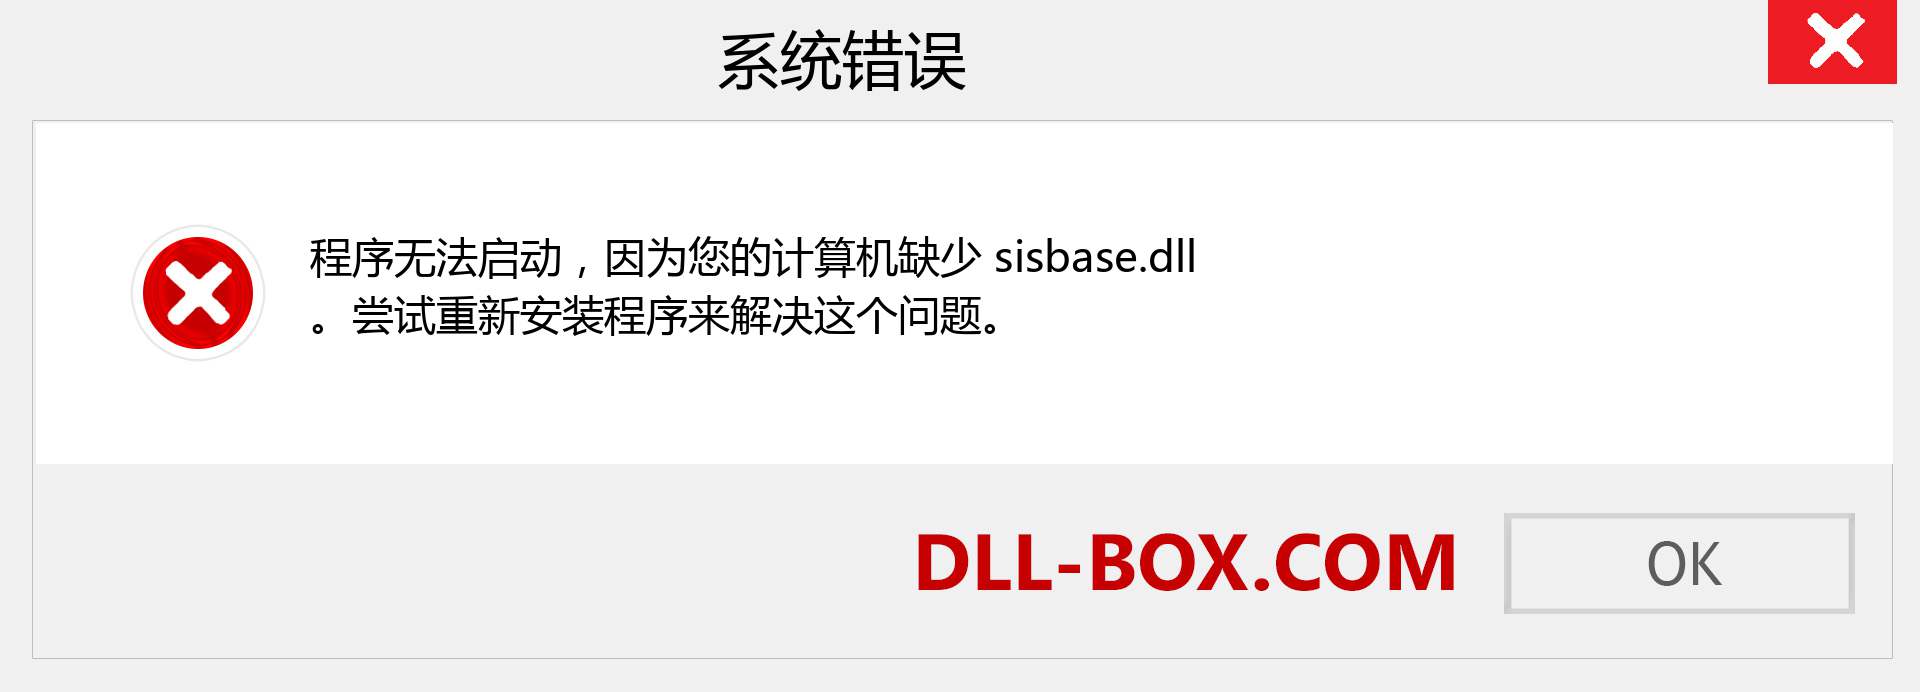 sisbase.dll 文件丢失？。 适用于 Windows 7、8、10 的下载 - 修复 Windows、照片、图像上的 sisbase dll 丢失错误